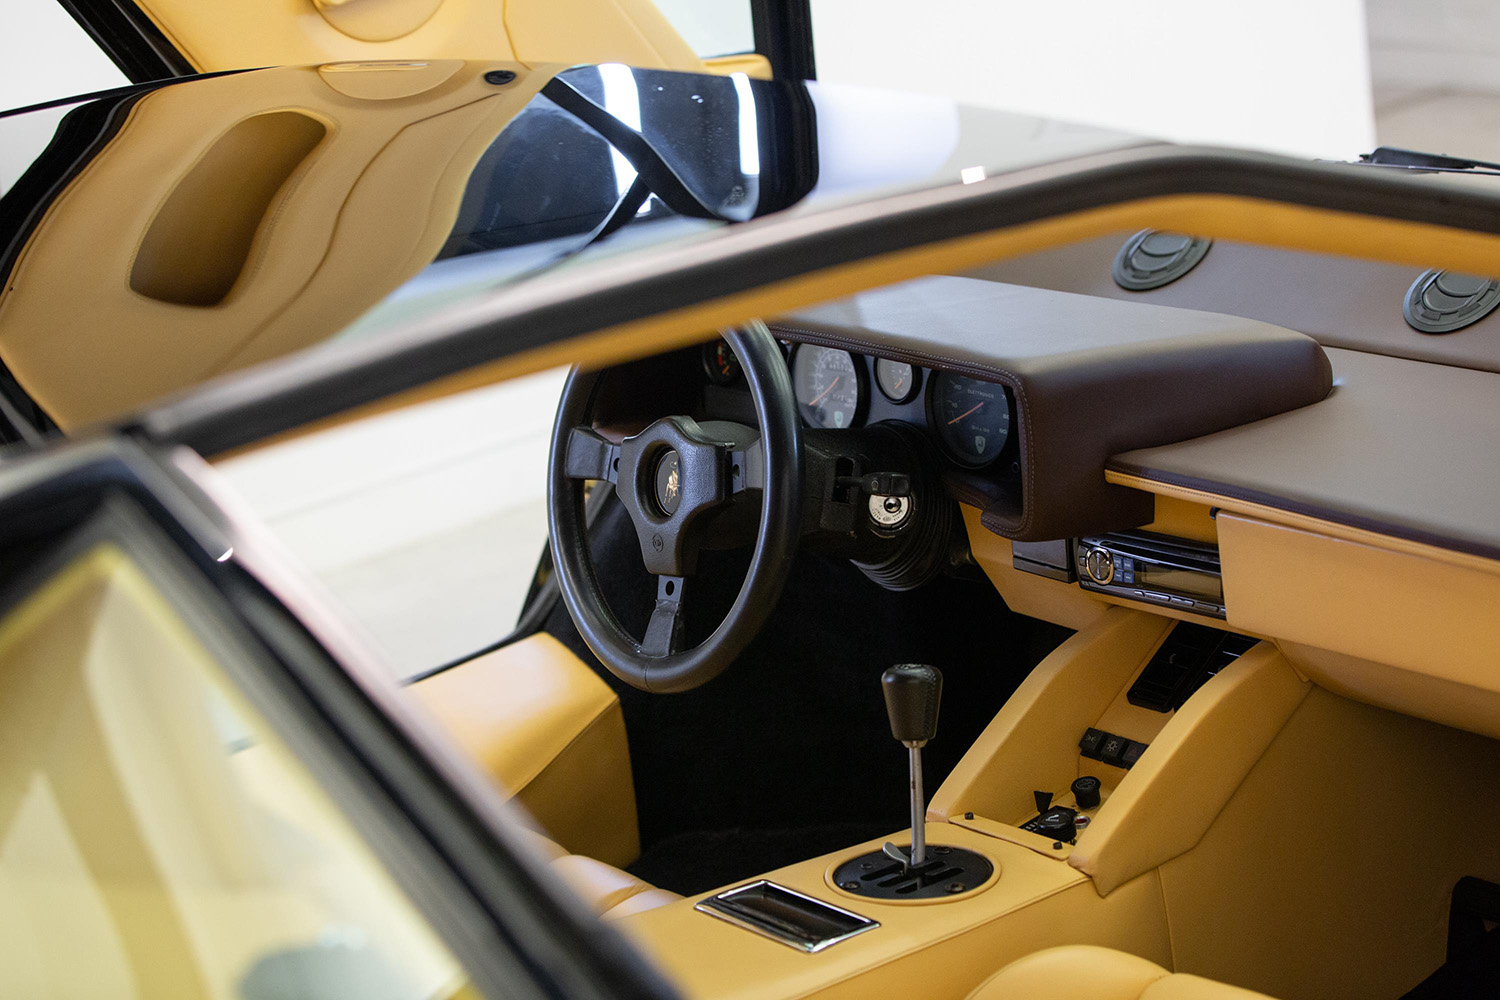 Tna interior inside black Lamborghini Countach with doors open